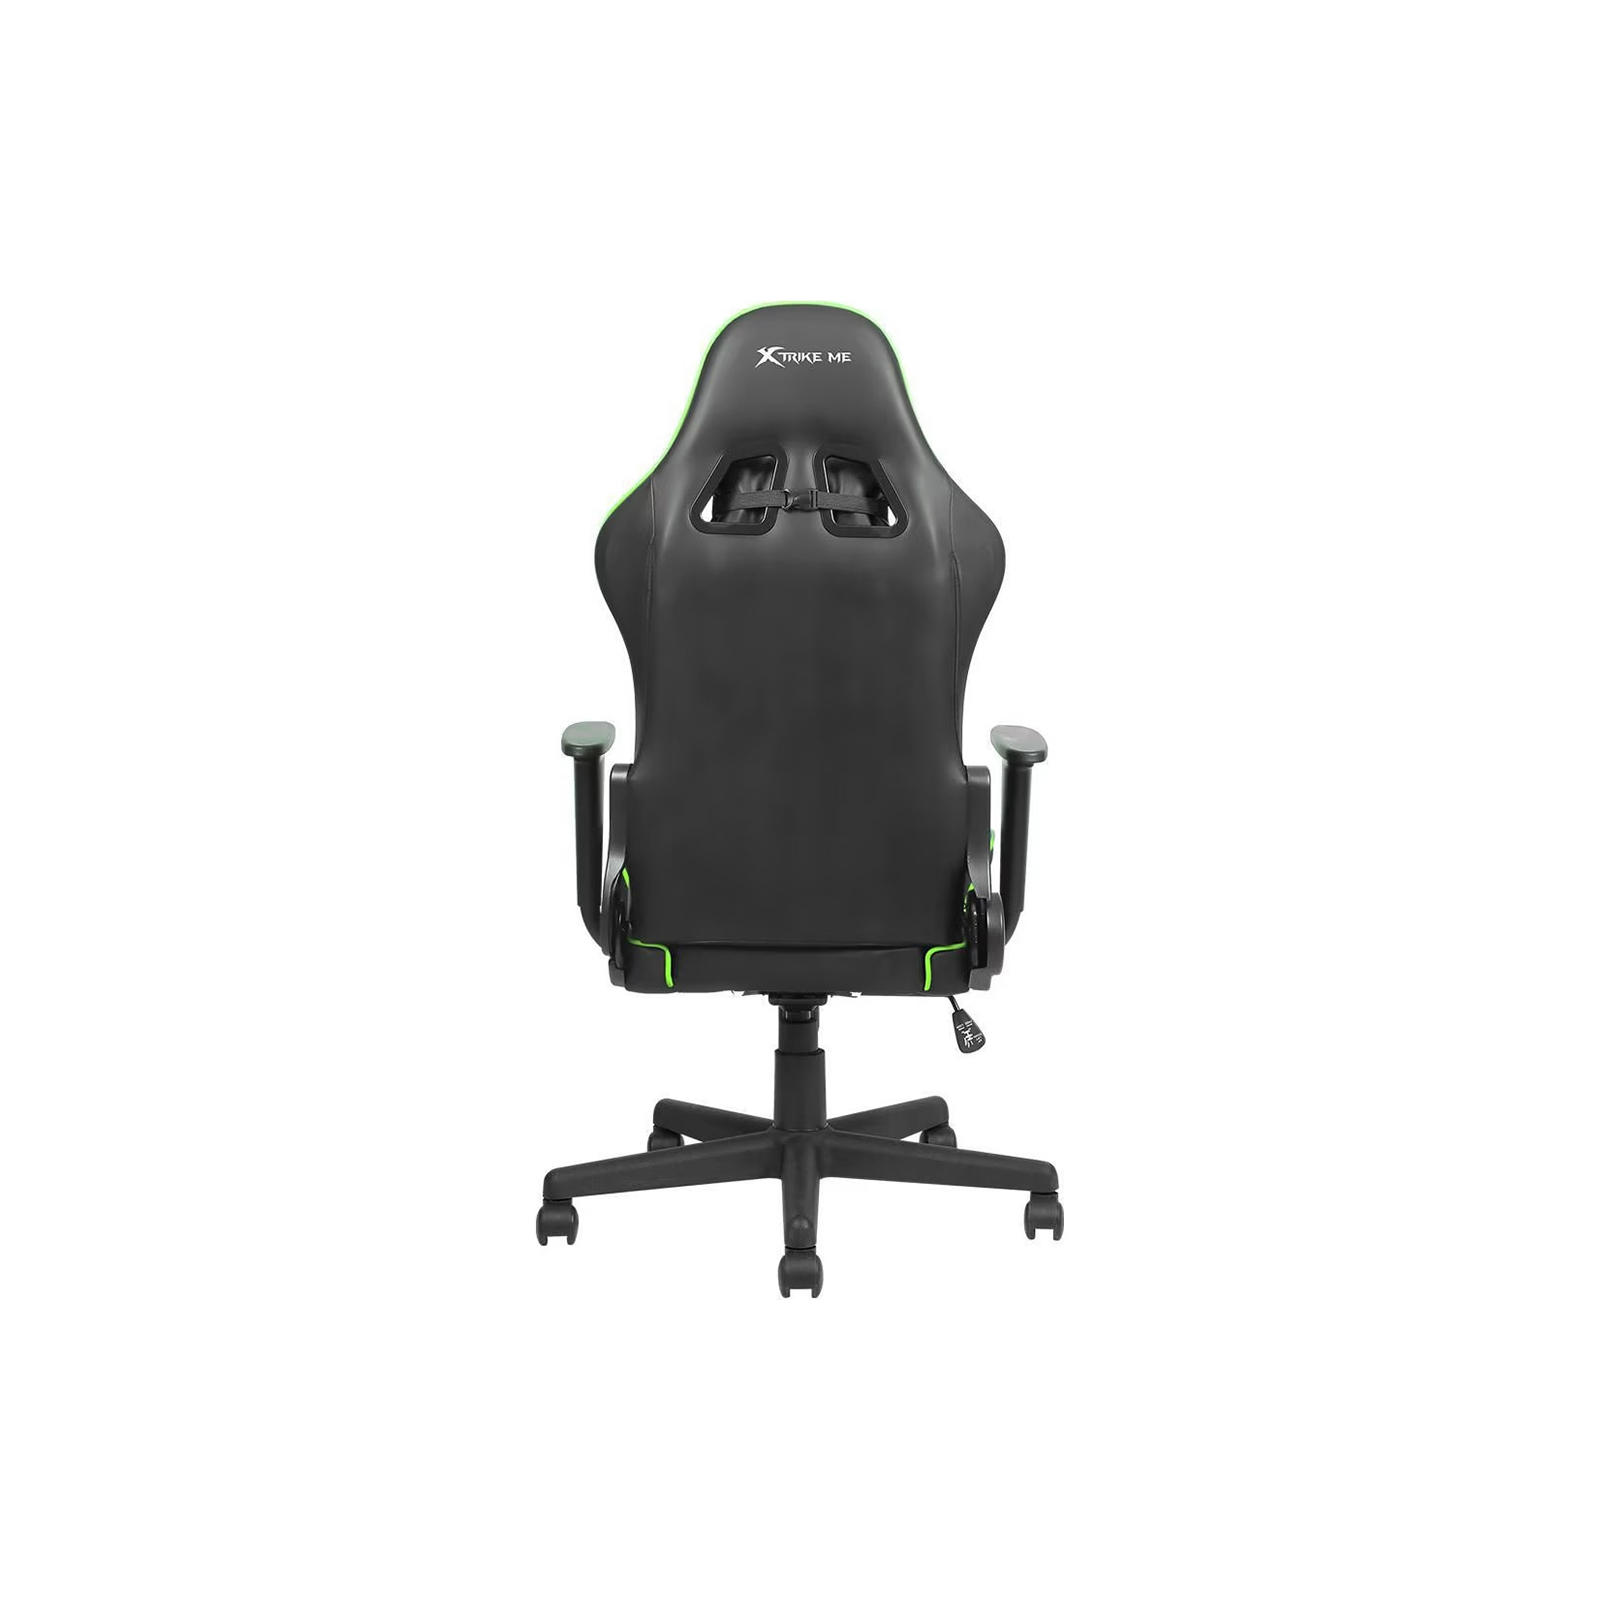 Кресло игровое Xtrike ME Advanced Gaming Chair GC-909 Black/Blue (GC-909BU) изображение 5